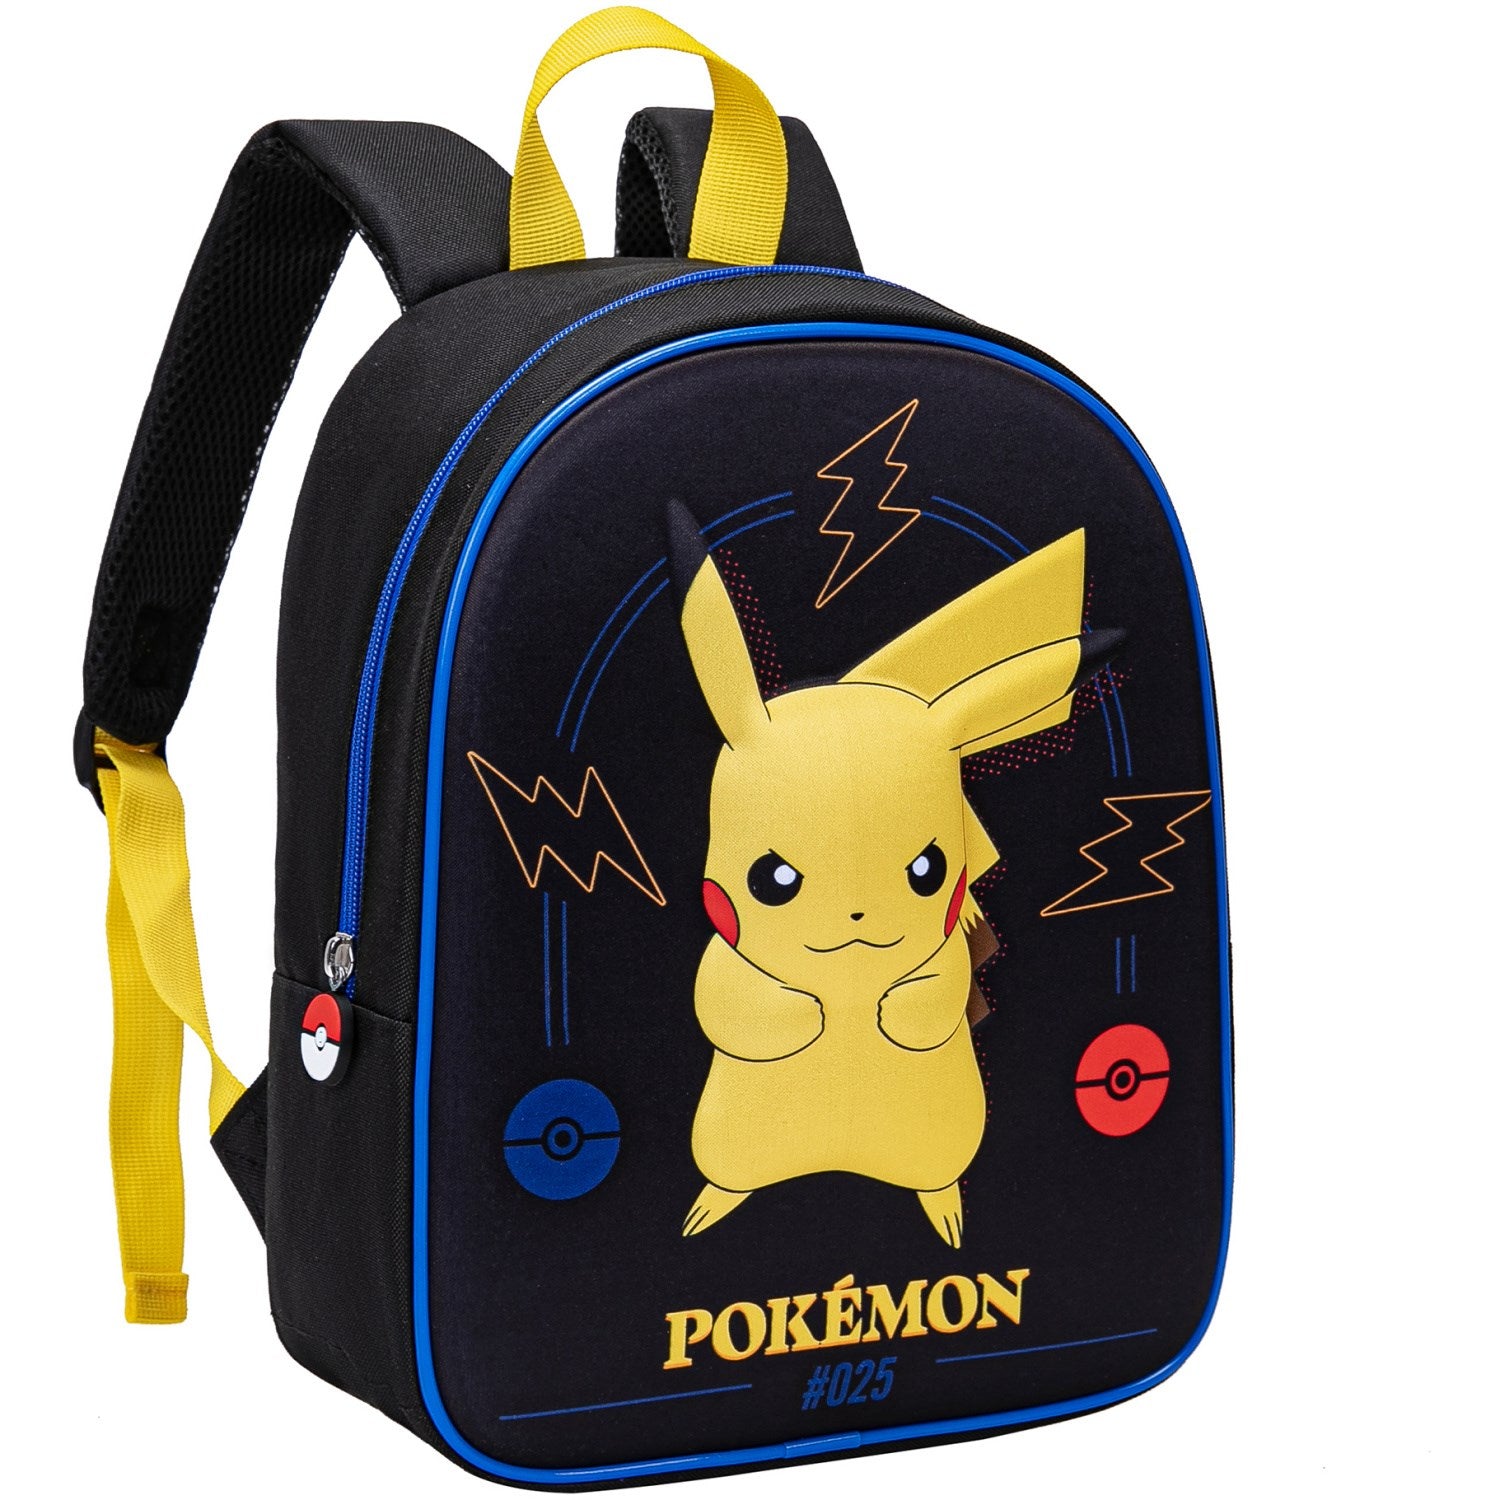 Euromic Pokémon Junior Backpack 5